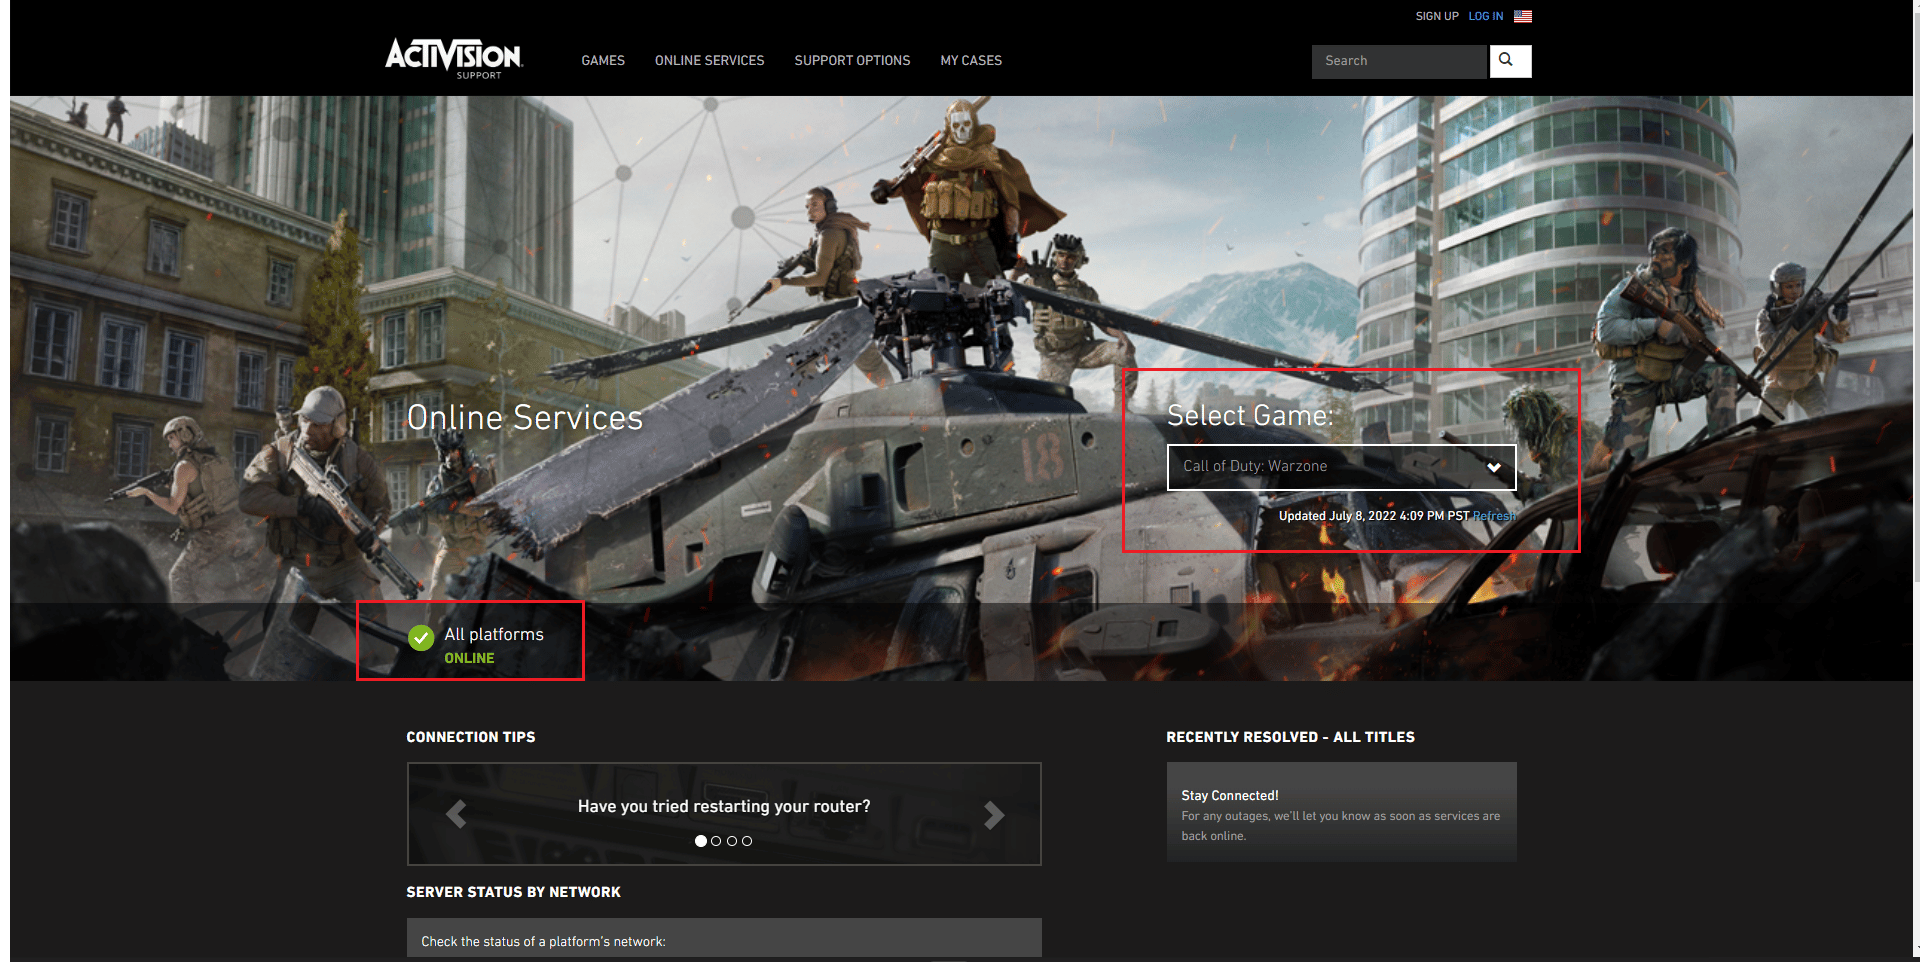 проверьте статус сервера Call of Duty Warzone на странице онлайн-услуг поддержки Activision